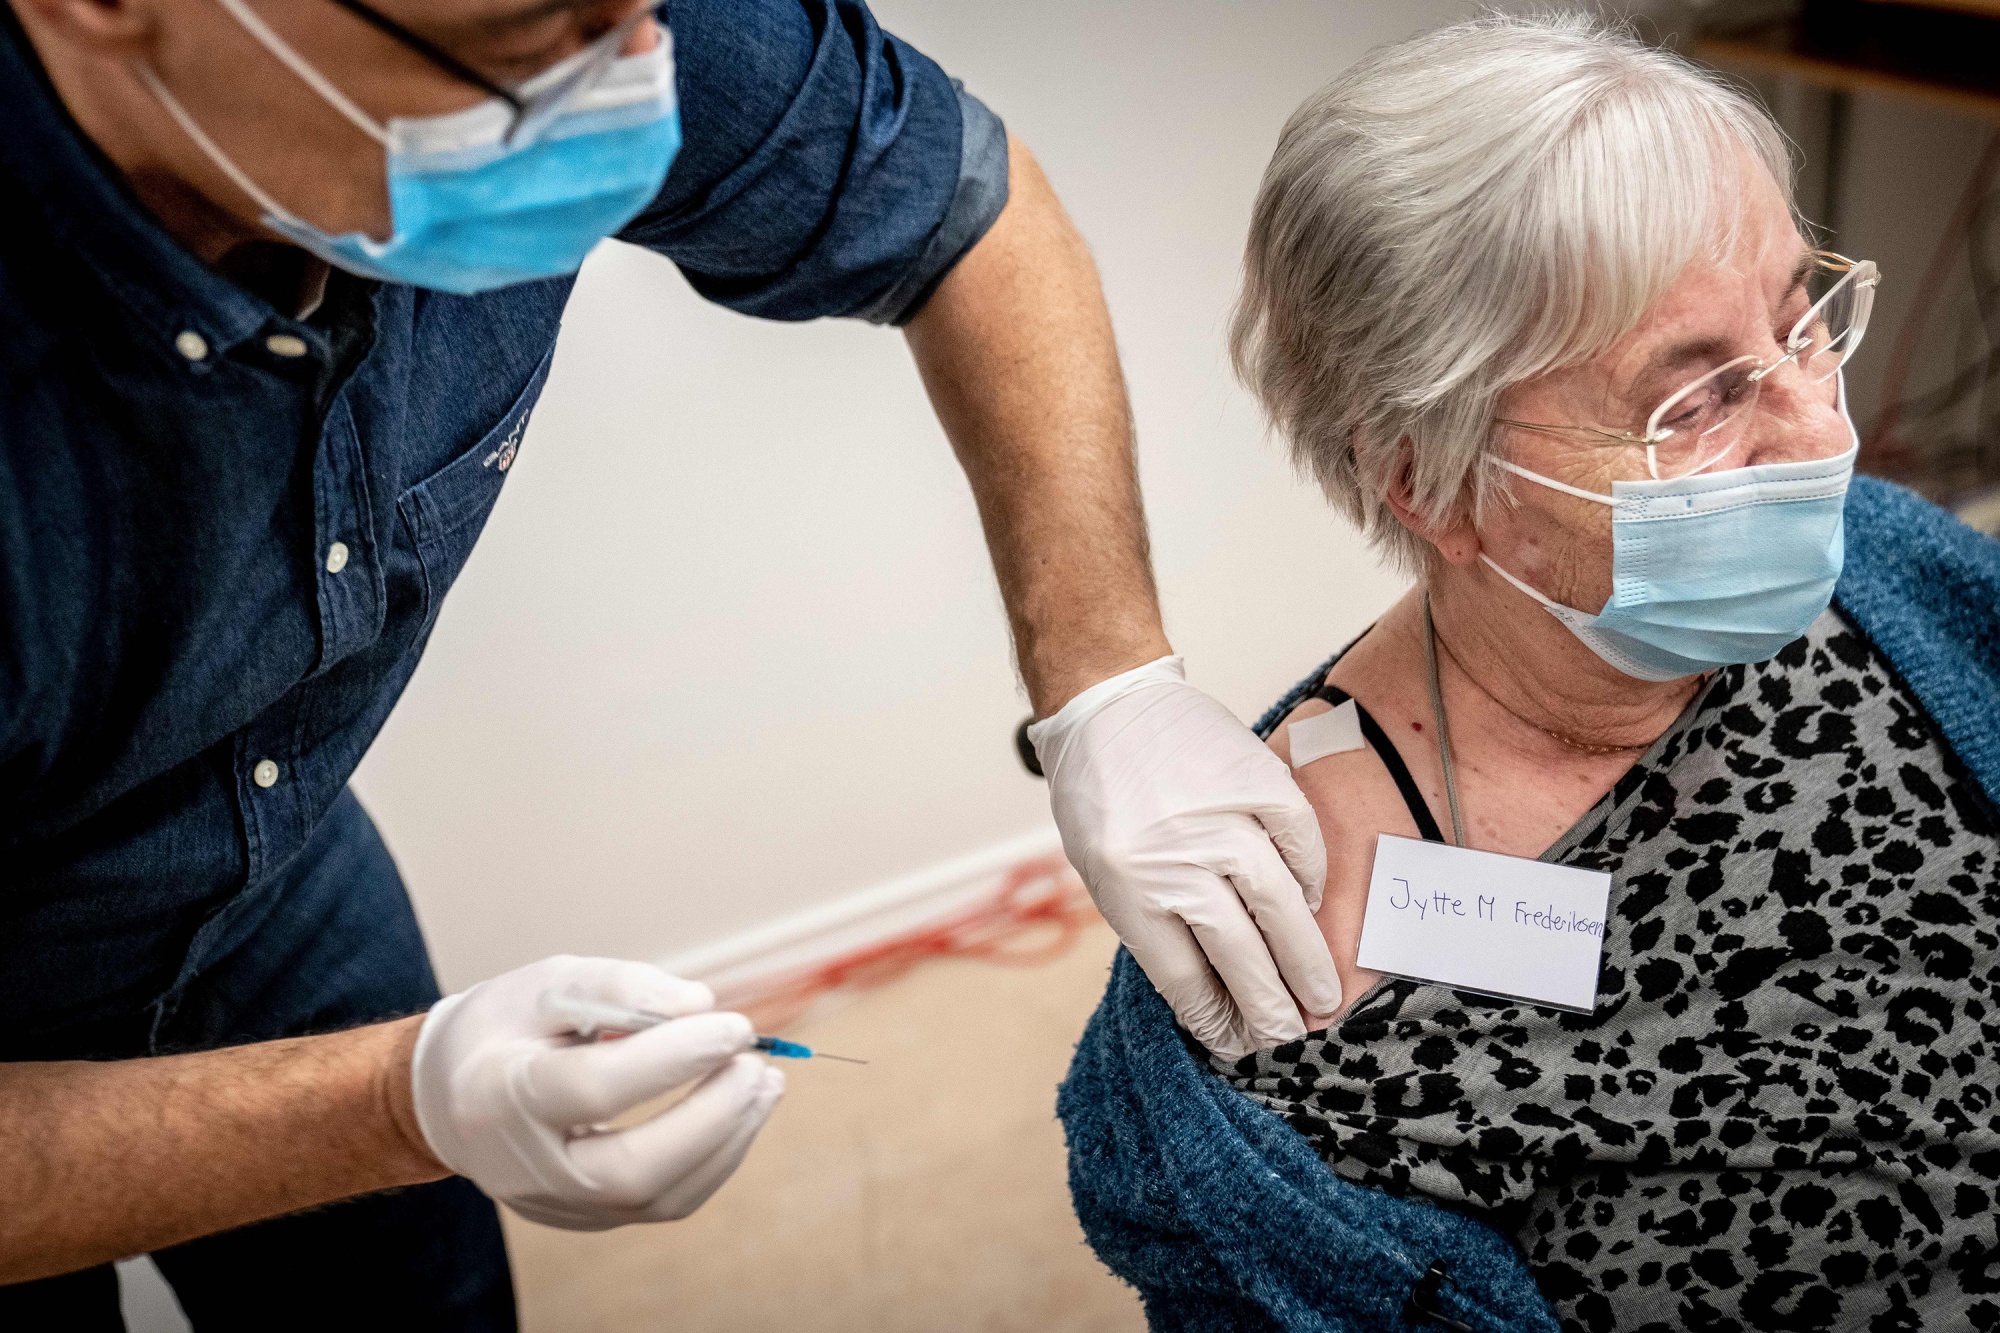 Denmark's Covid Vaccination Program Takes the Lead in EU - Bloomberg